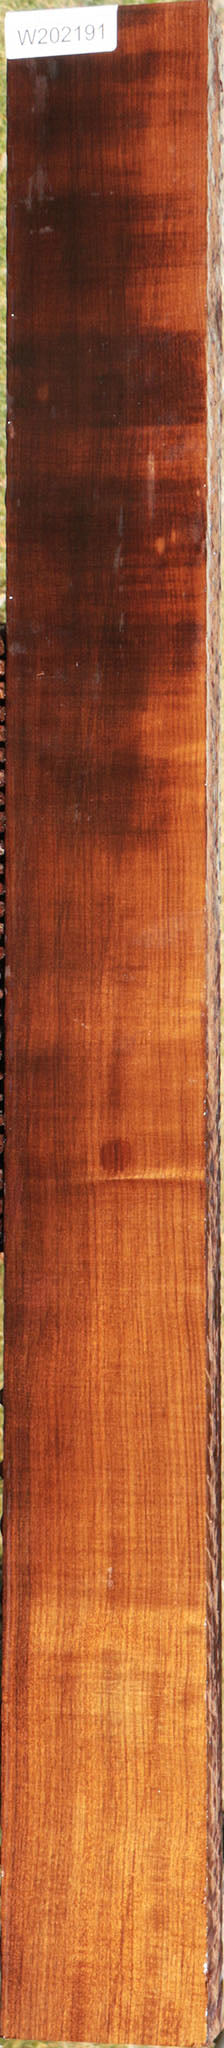 Quartersawn Imbuia Instrument Lumber